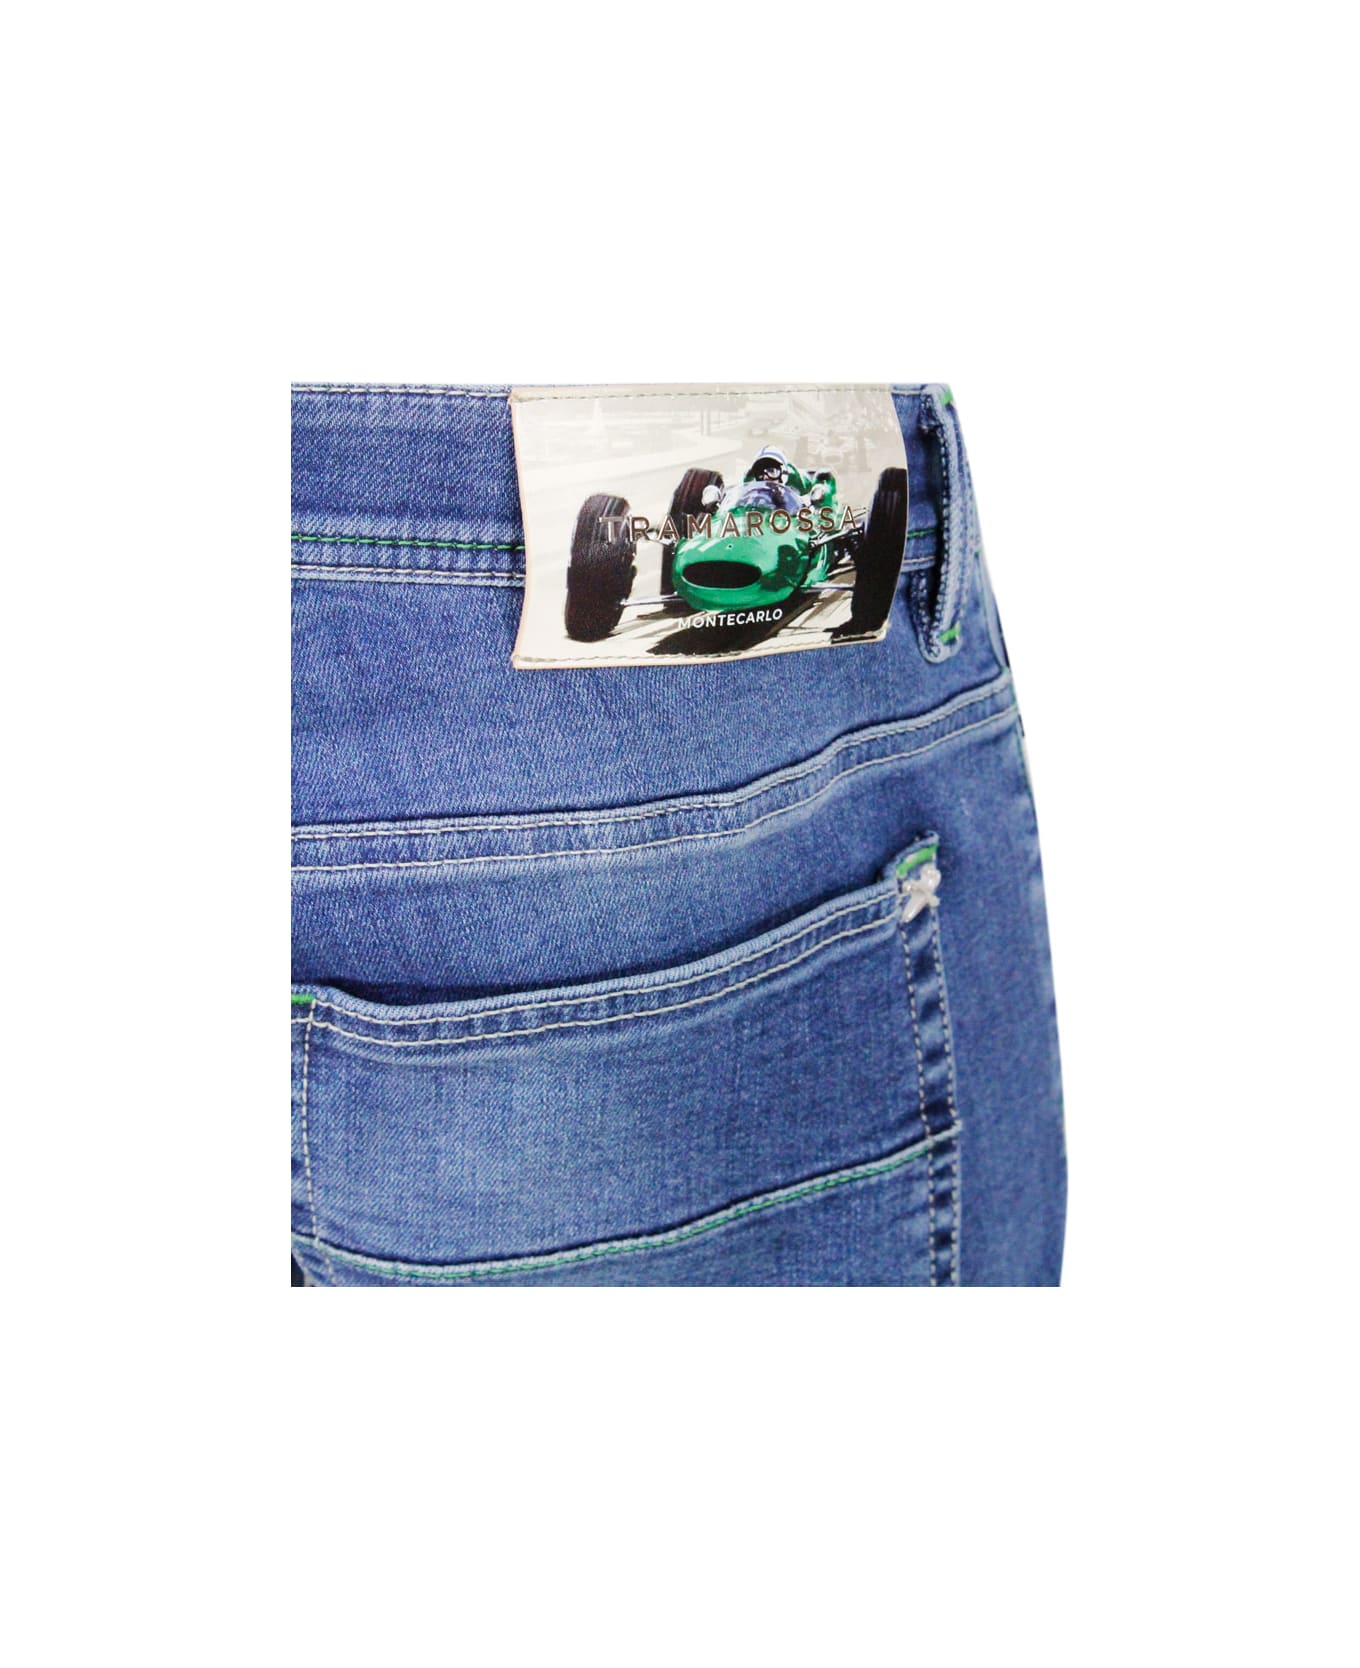 Sartoria Tramarossa Leonardo Zip Montecarlo Trousers In 5-pocket Super Stretch Selvedge Denim With Tone-on-tone Tailored Stitching And Leather Tag And Zip Closure - Denim デニム